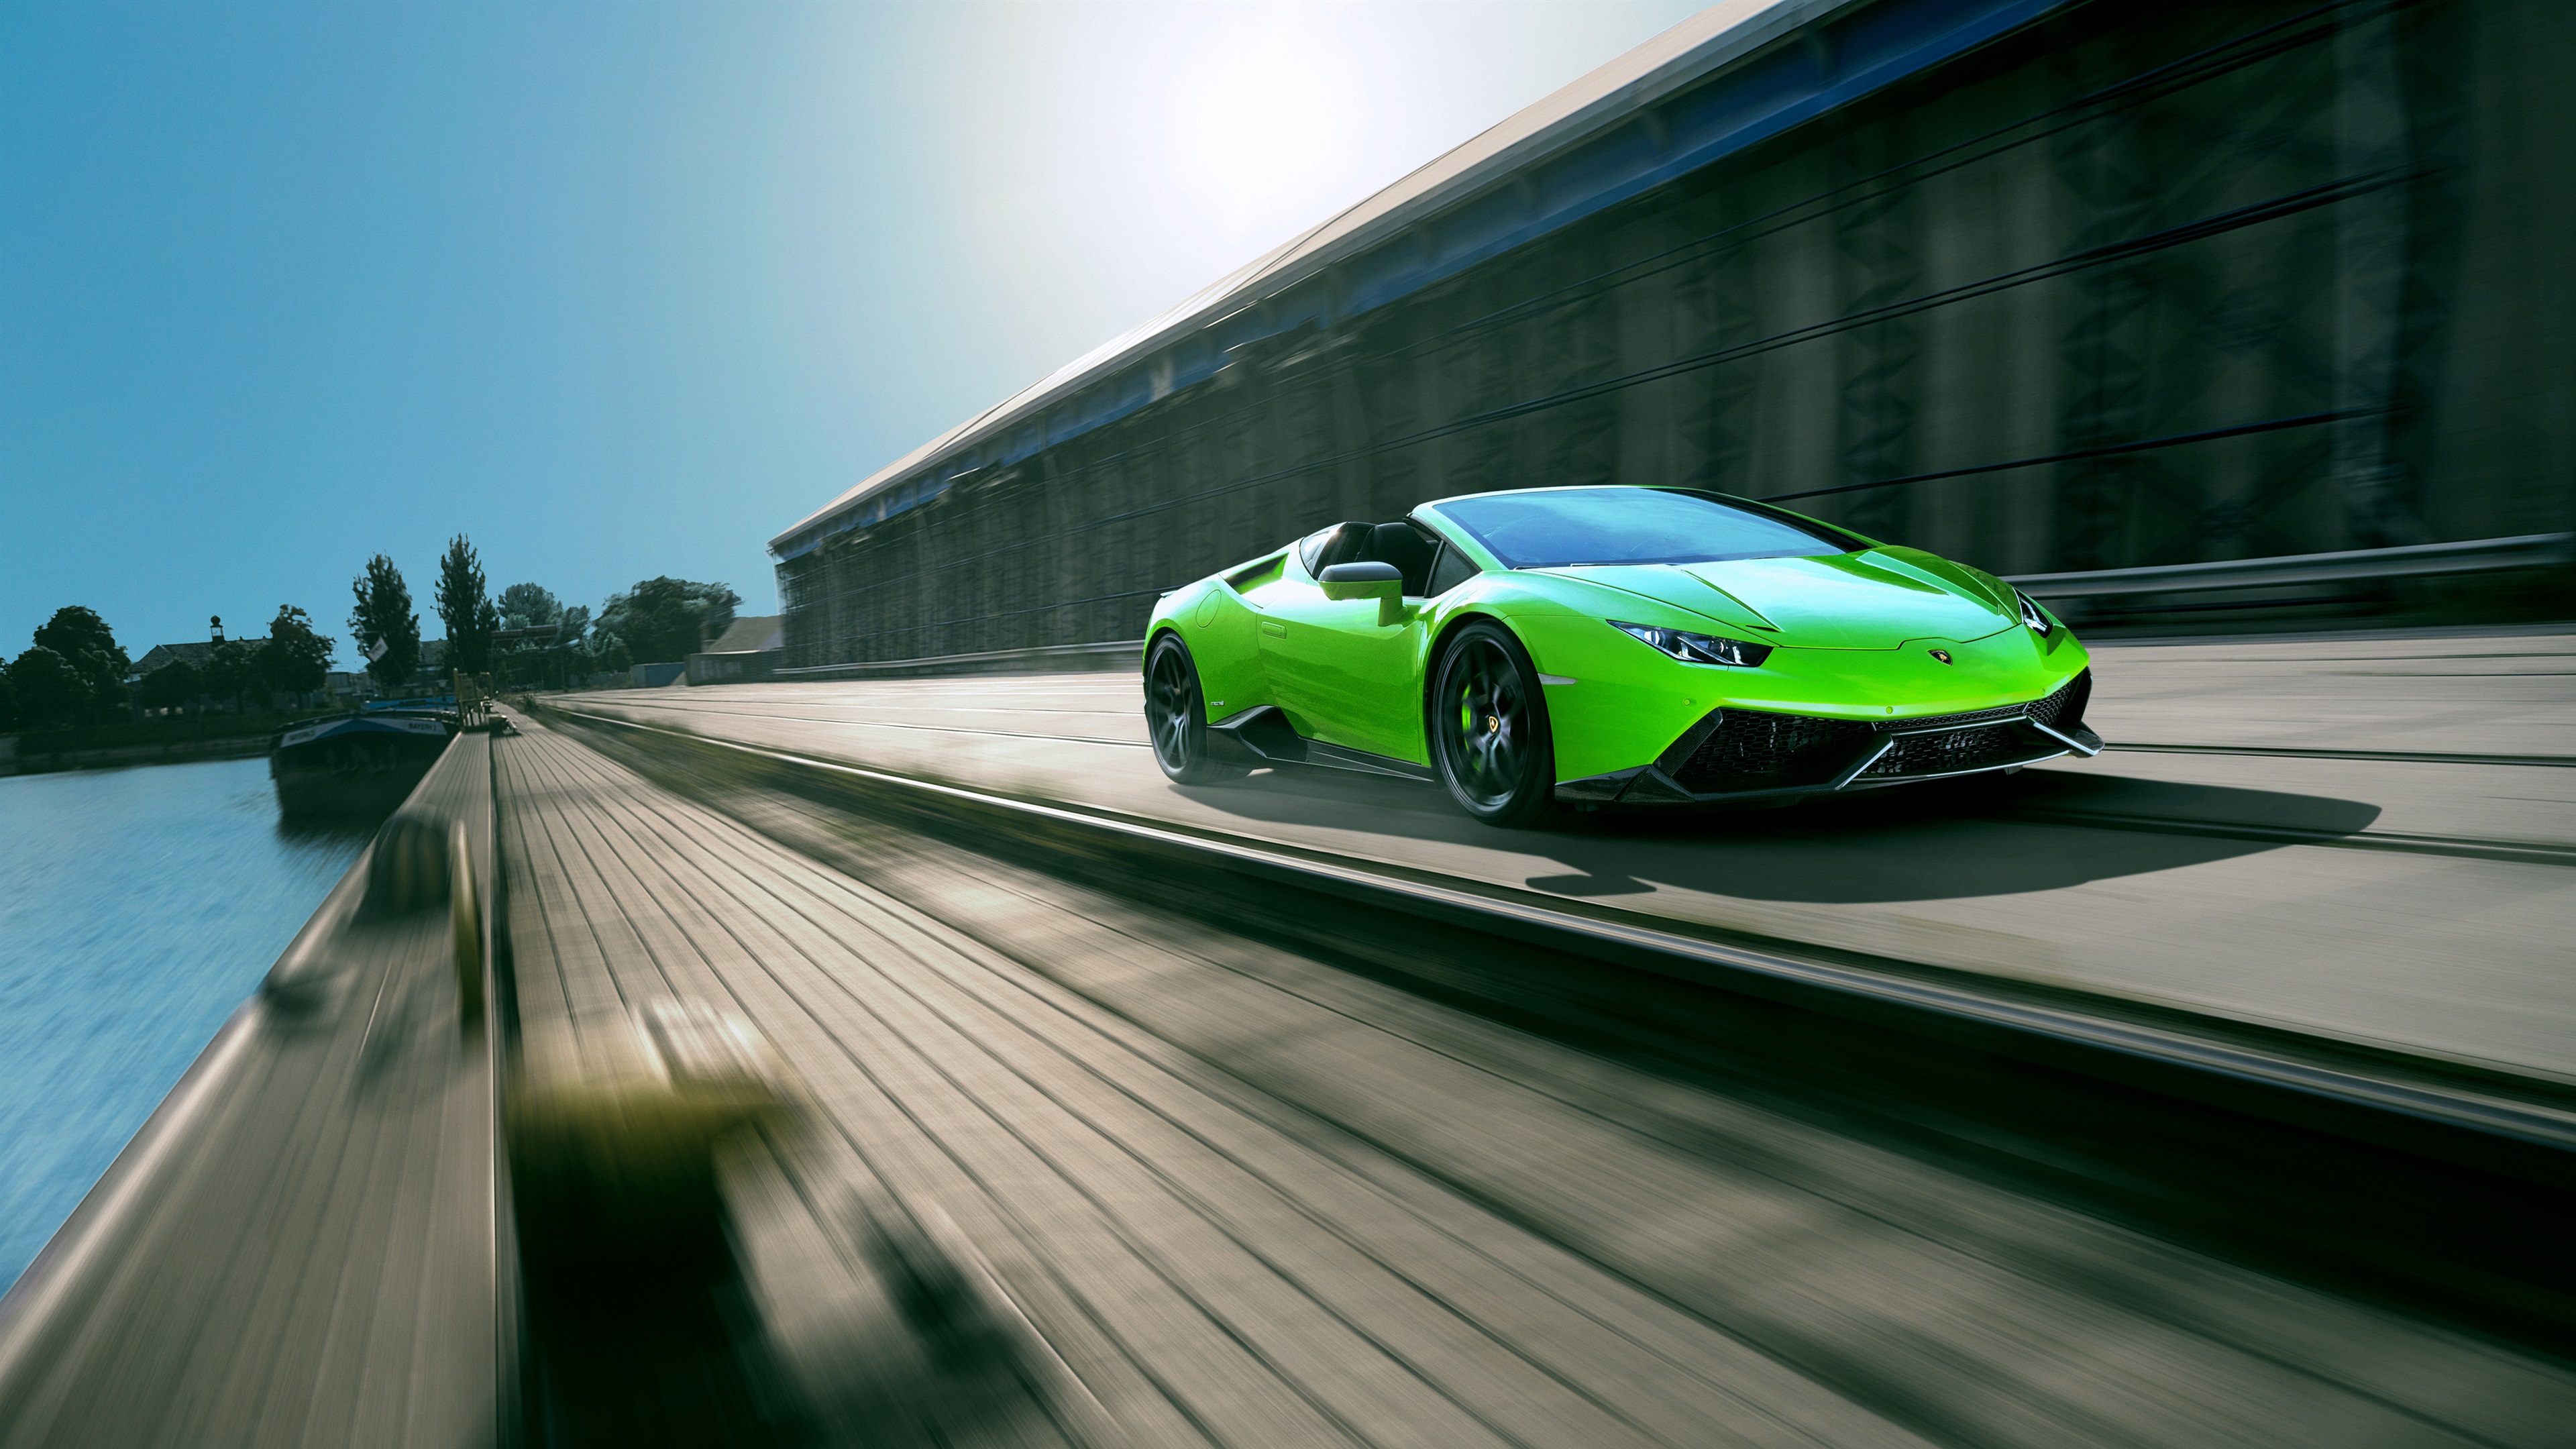 Download This Wallpaper - Iphone X Lamborghini Huracan , HD Wallpaper & Backgrounds